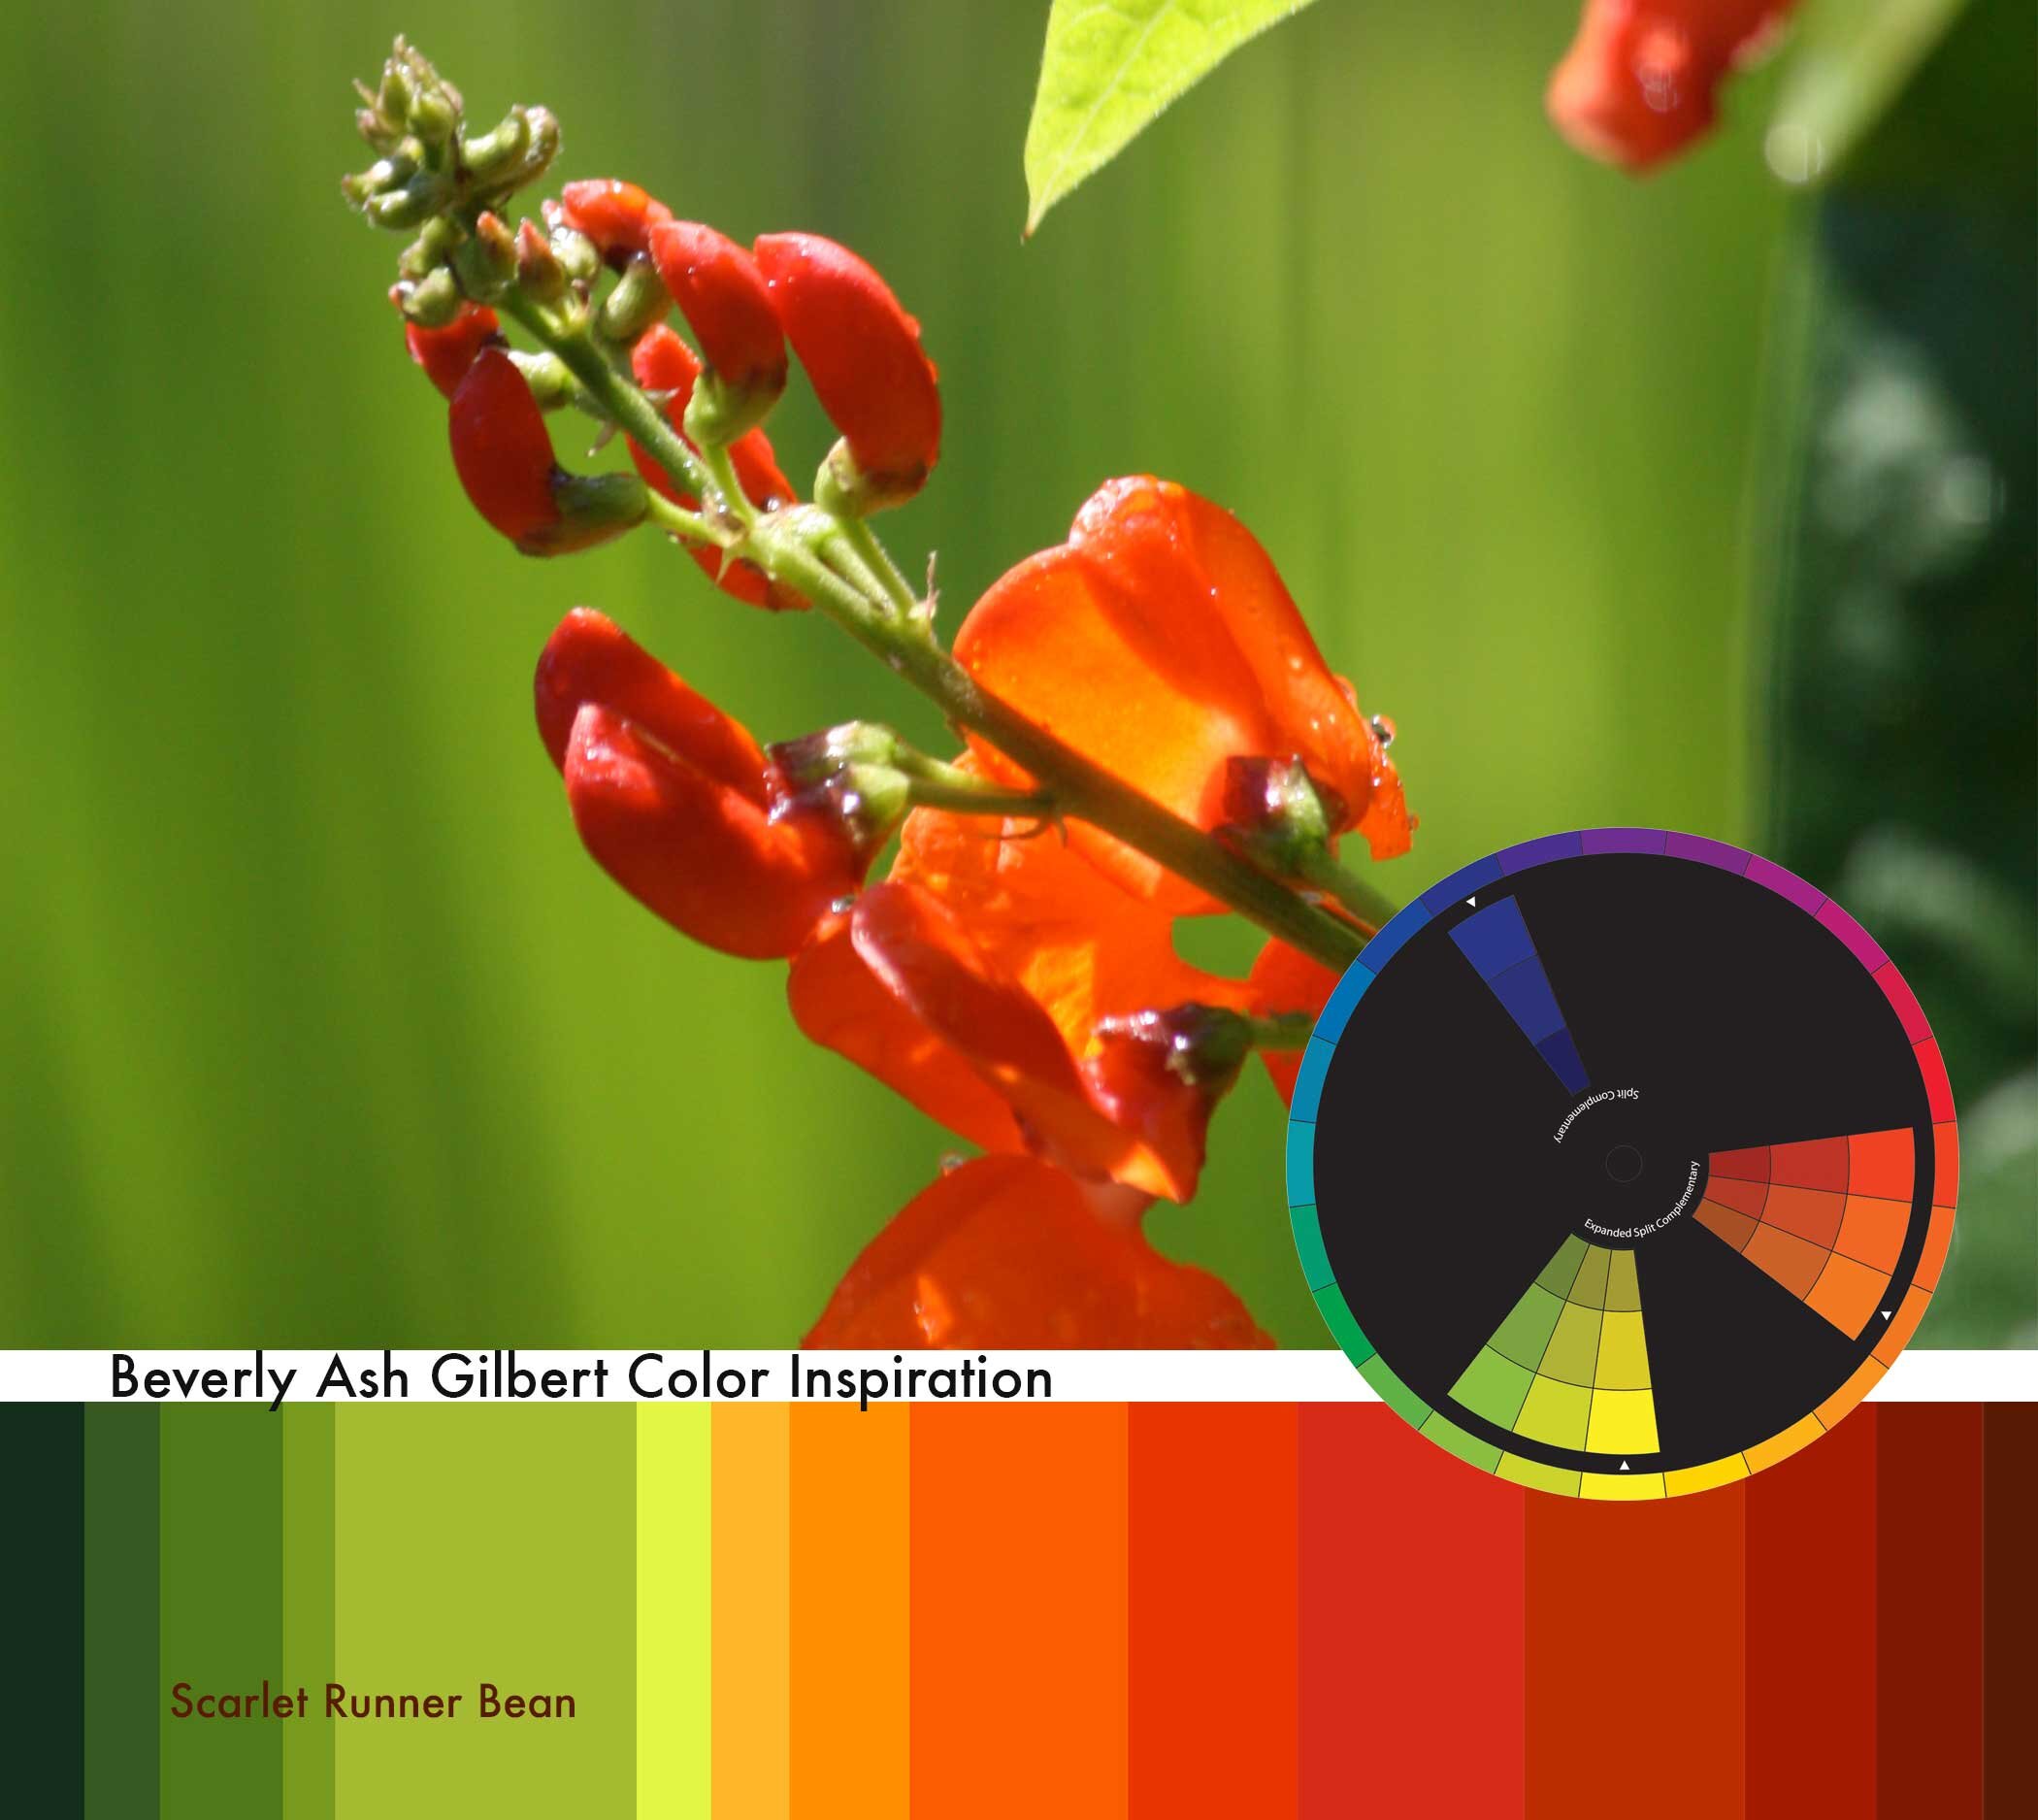 ColorInspiration_ScarletRunnerBean_small.jpg